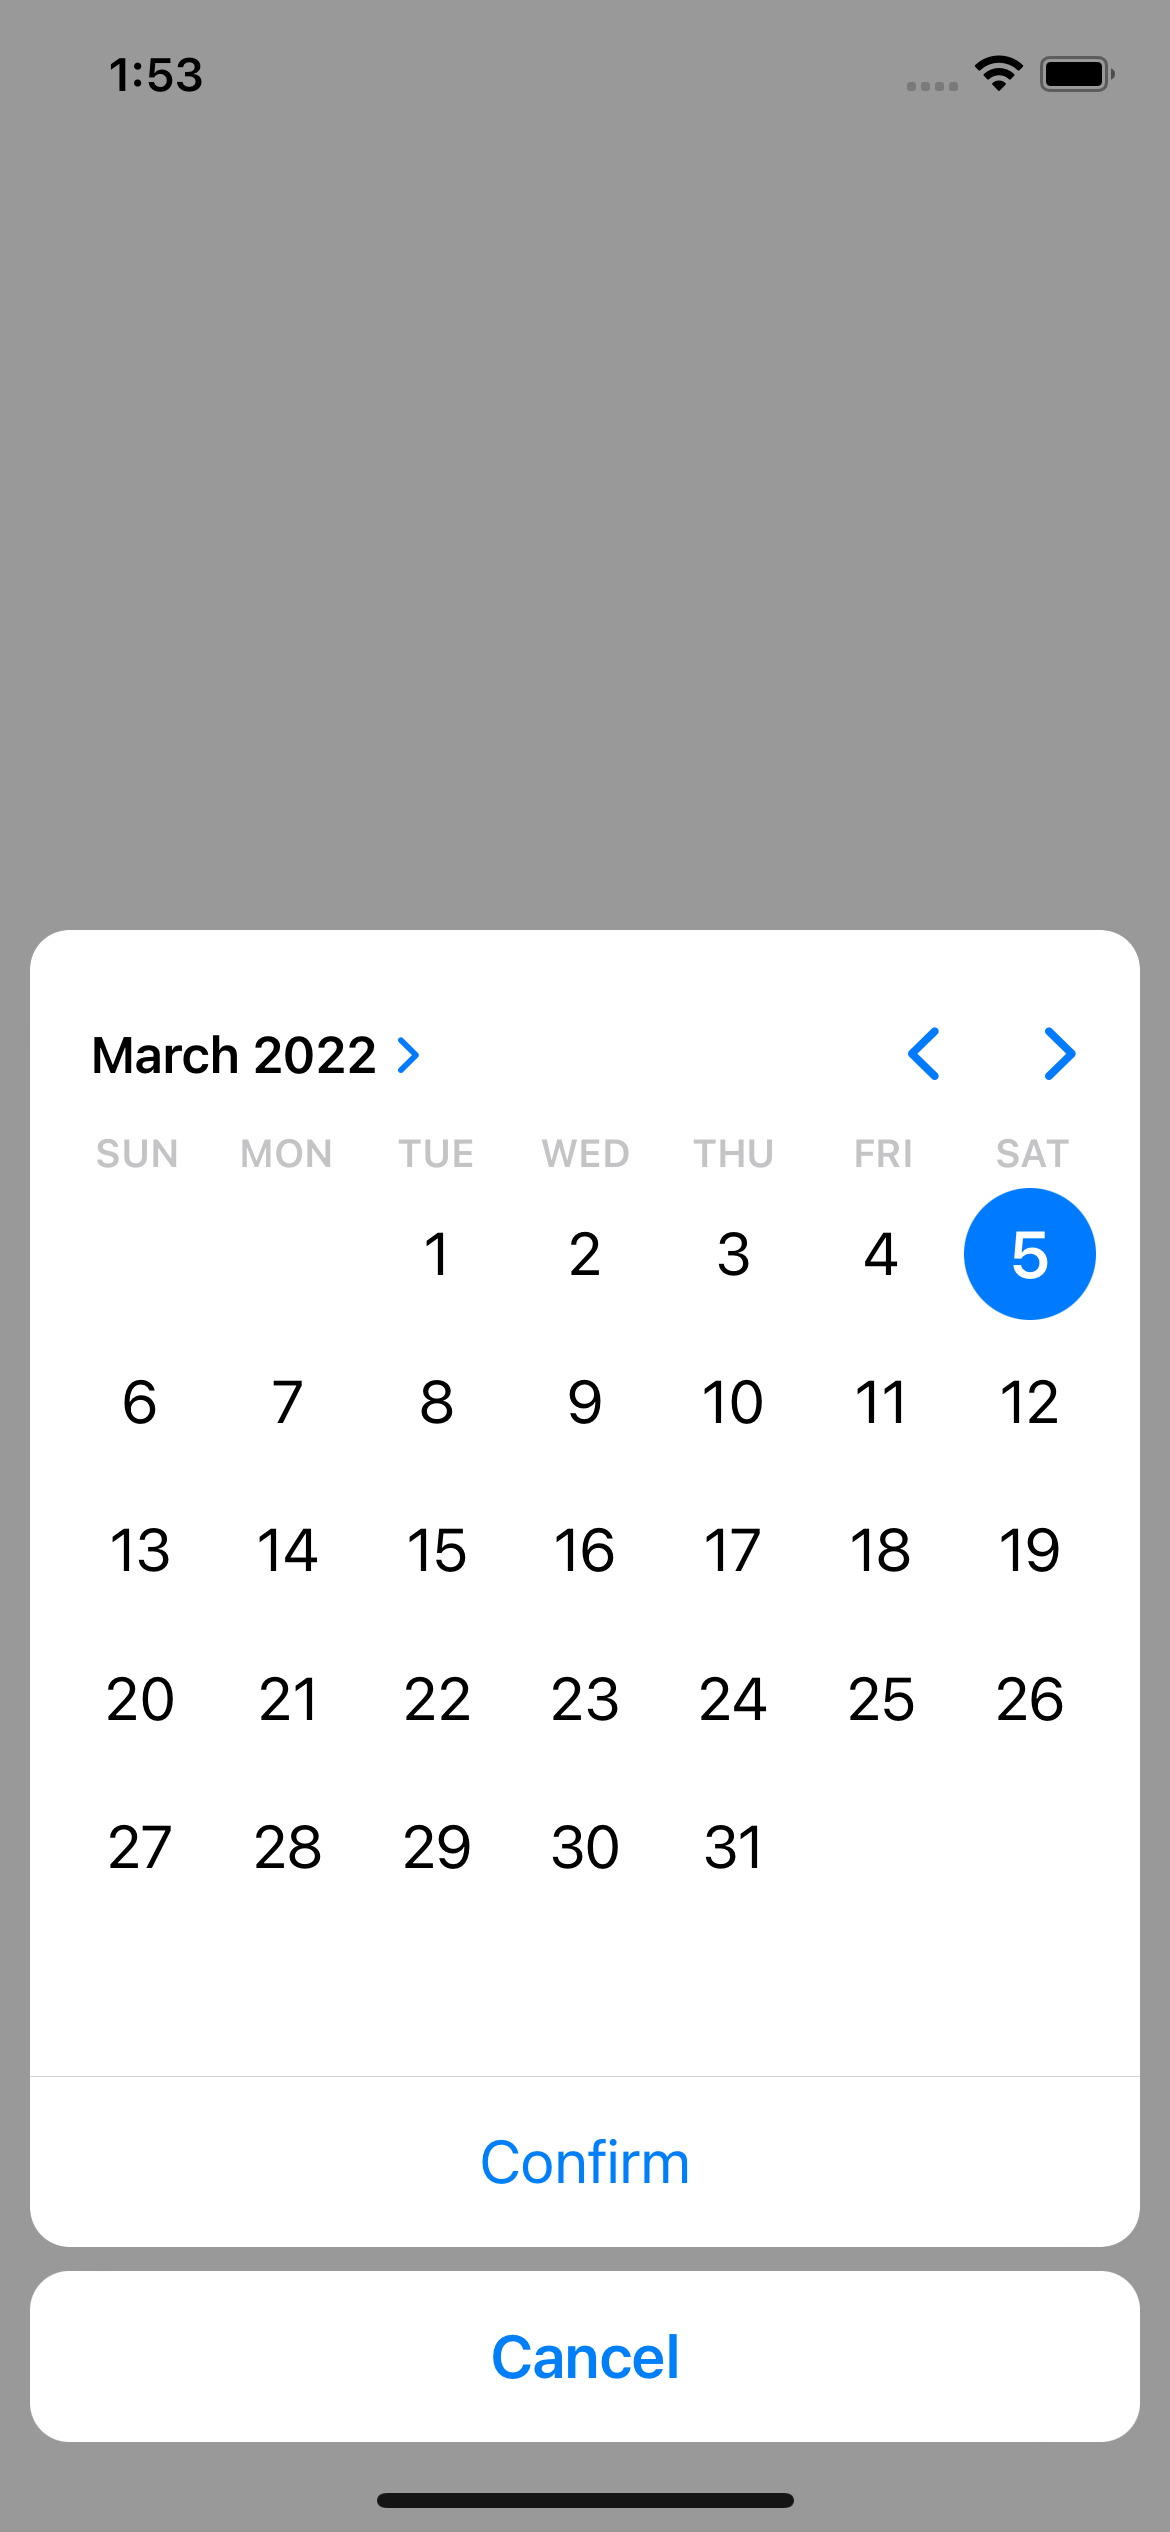 React Native Modal Datetime Picker - iOS 14 style datetime picker